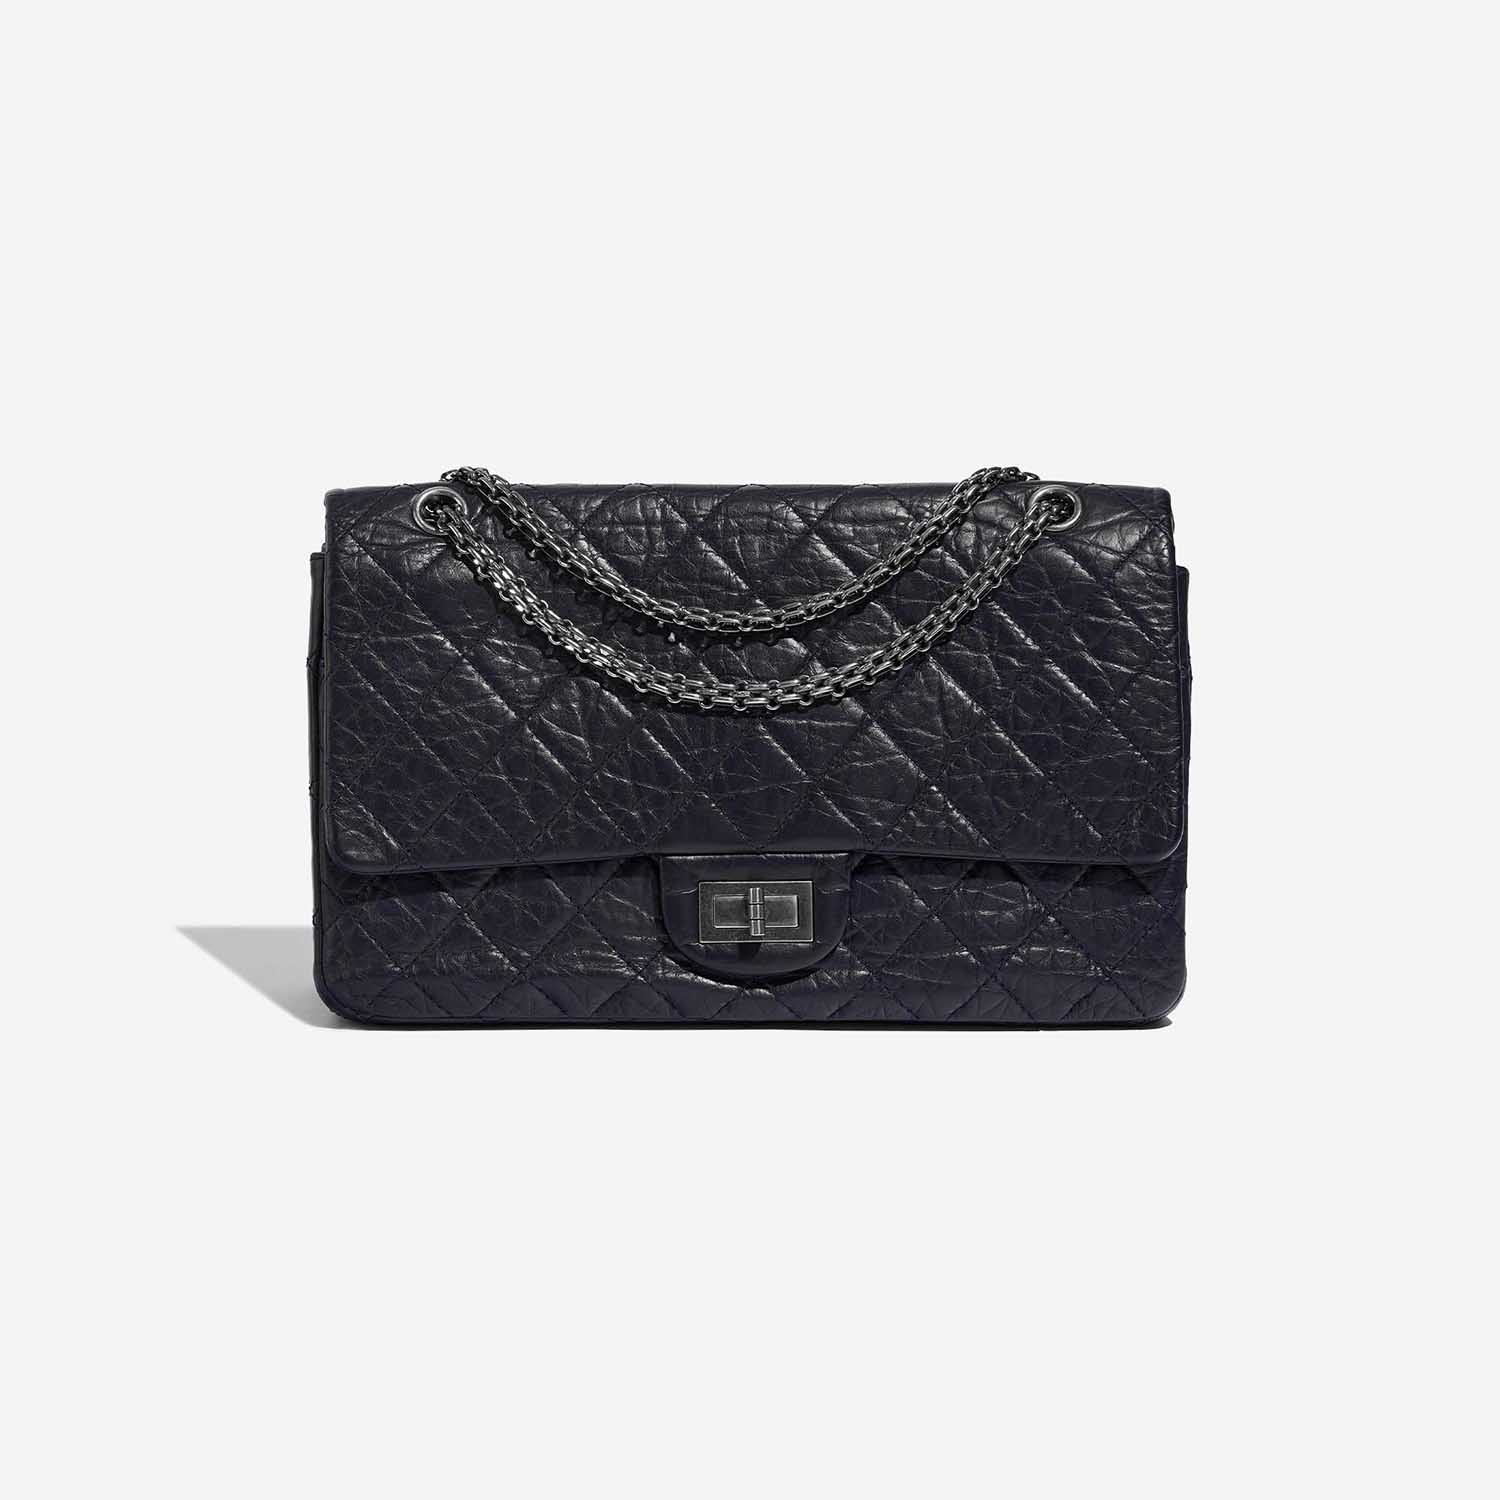 Pre-owned Chanel bag 2.55 Reissue 227 Aged Calfskin Dark Blue Front | Sell your designer bag on Saclab.com